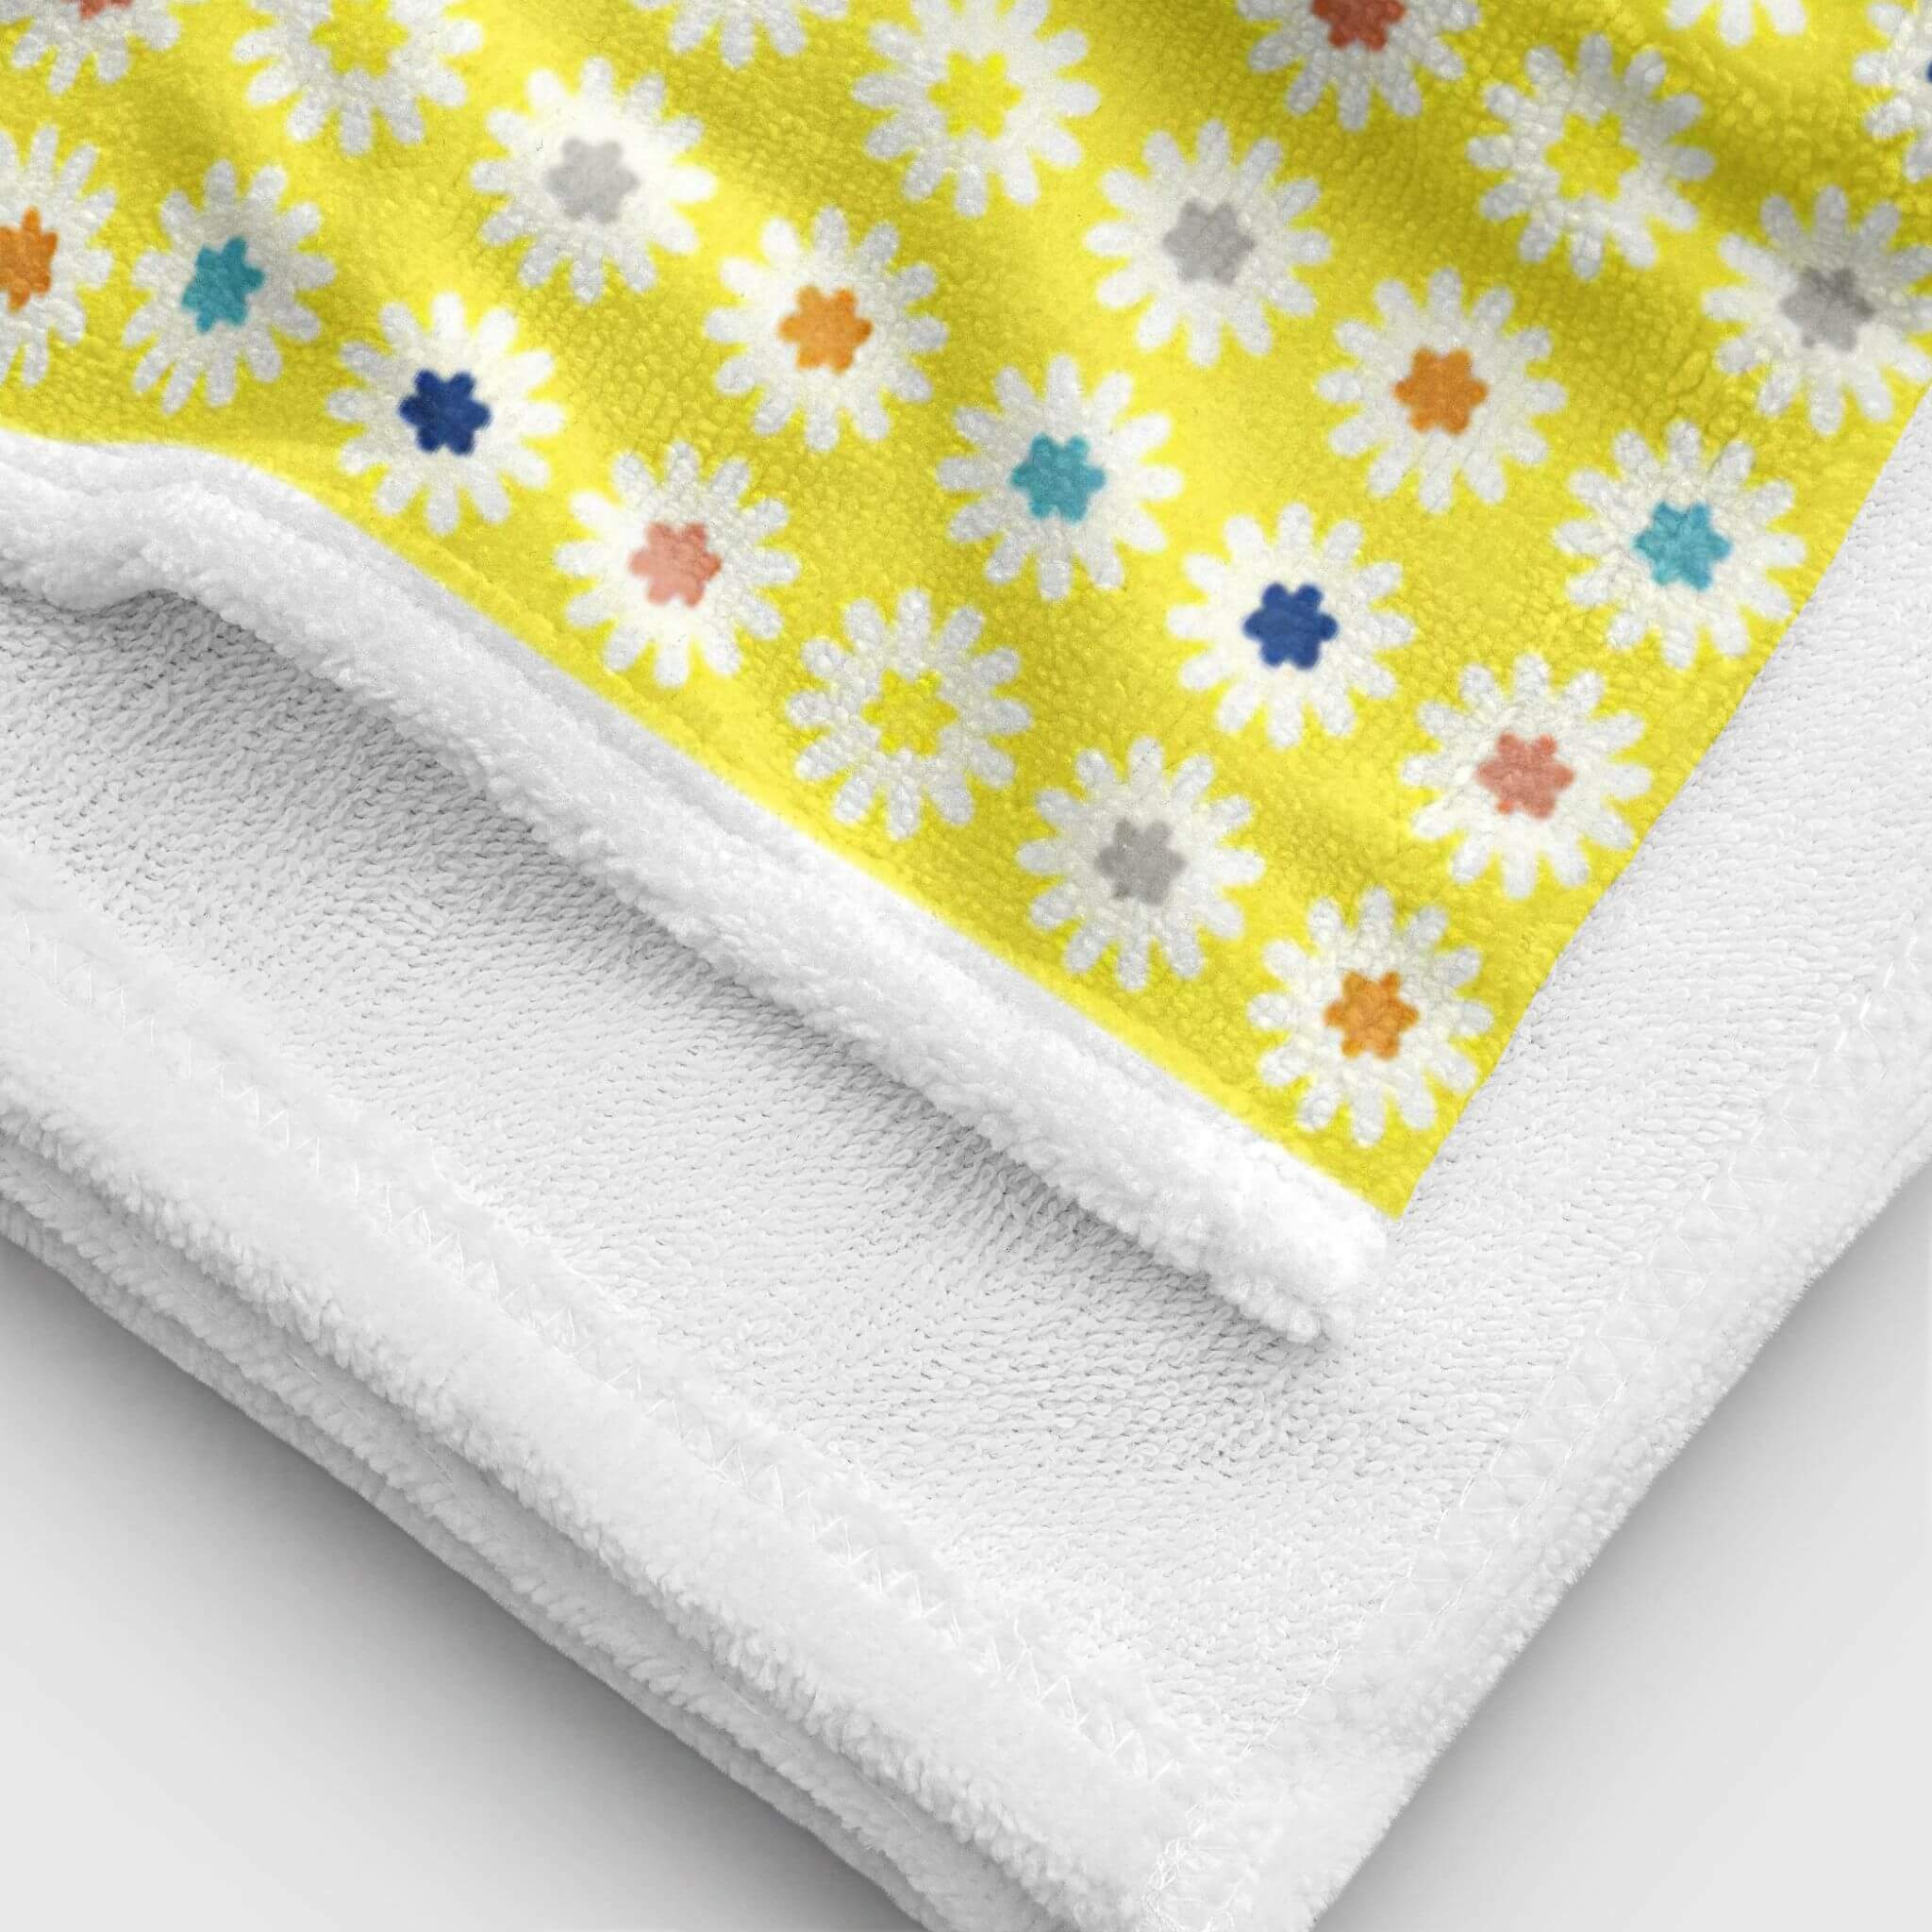 miteigi Daisy Beach Towel yellow miteigi logo Flowers design cotton blend terry fabric floral bath towels 30″×60″ Getaway holiday vacation bathroom linens home decor gifting